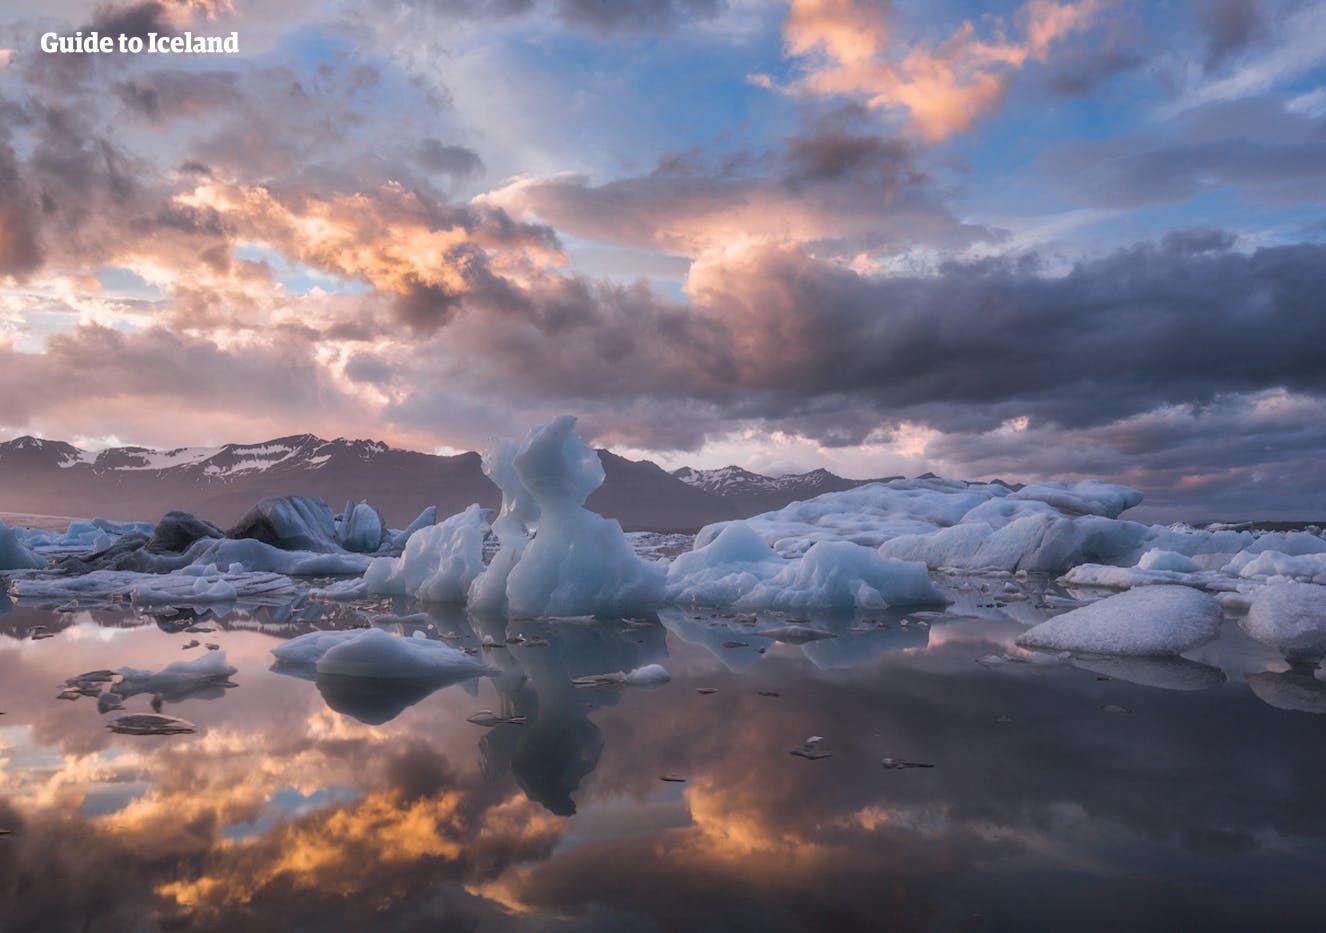 La laguna glaciale di Jokulsarlon nell'Islanda meridionale.